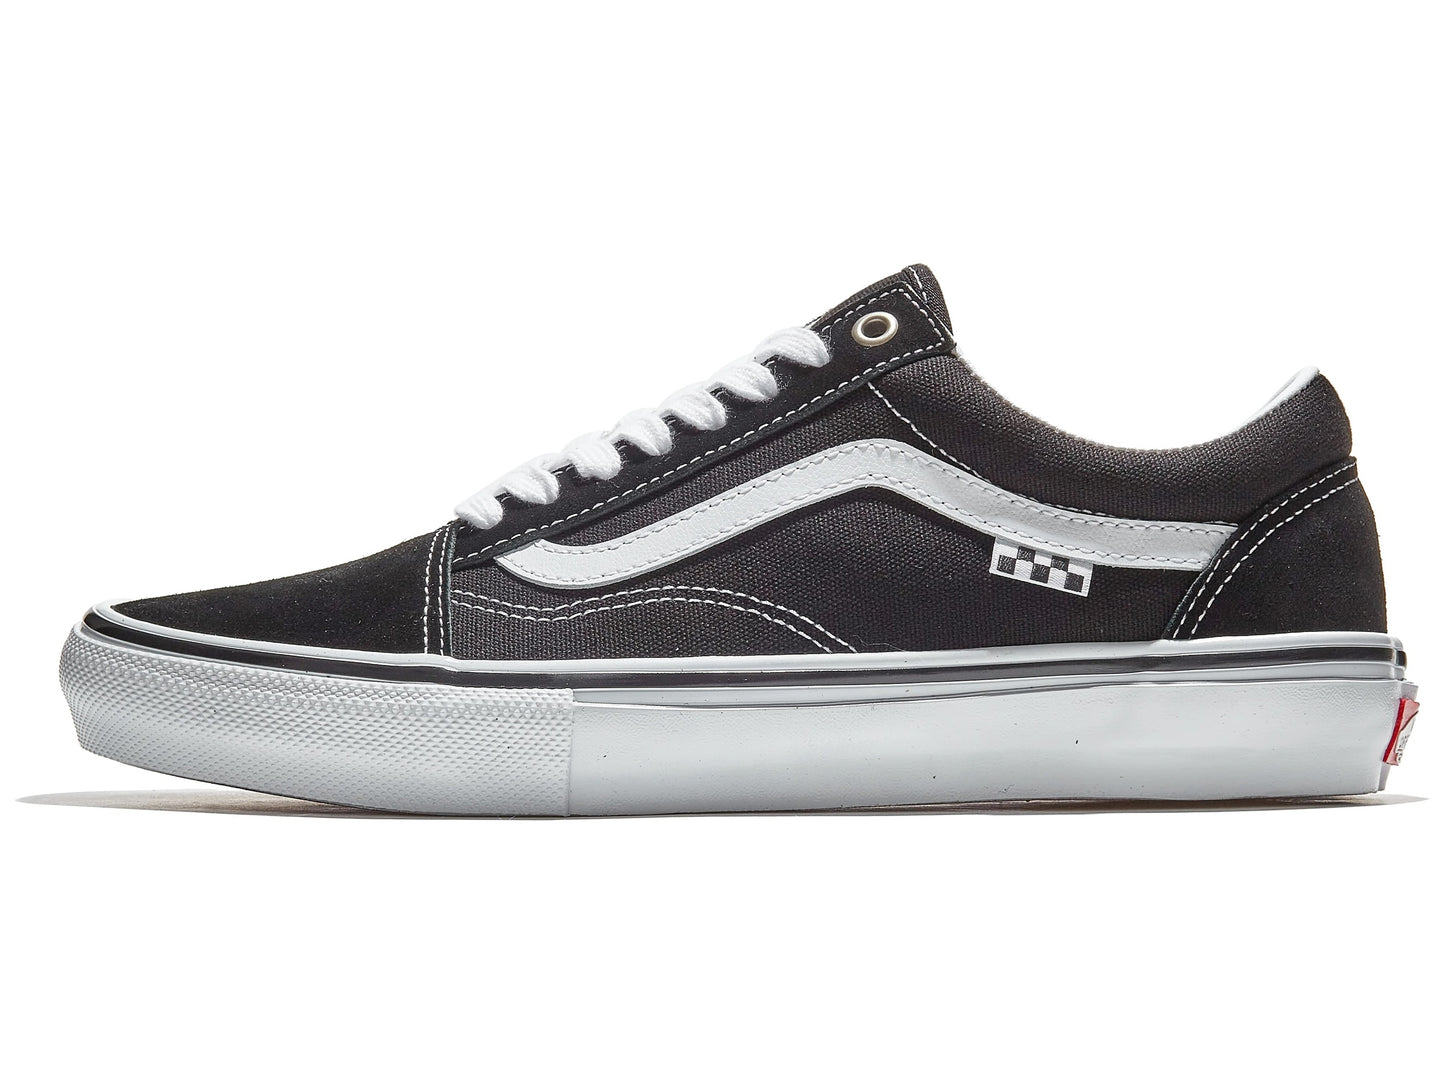 VANS Skate Old Skool Shoes - Black/White